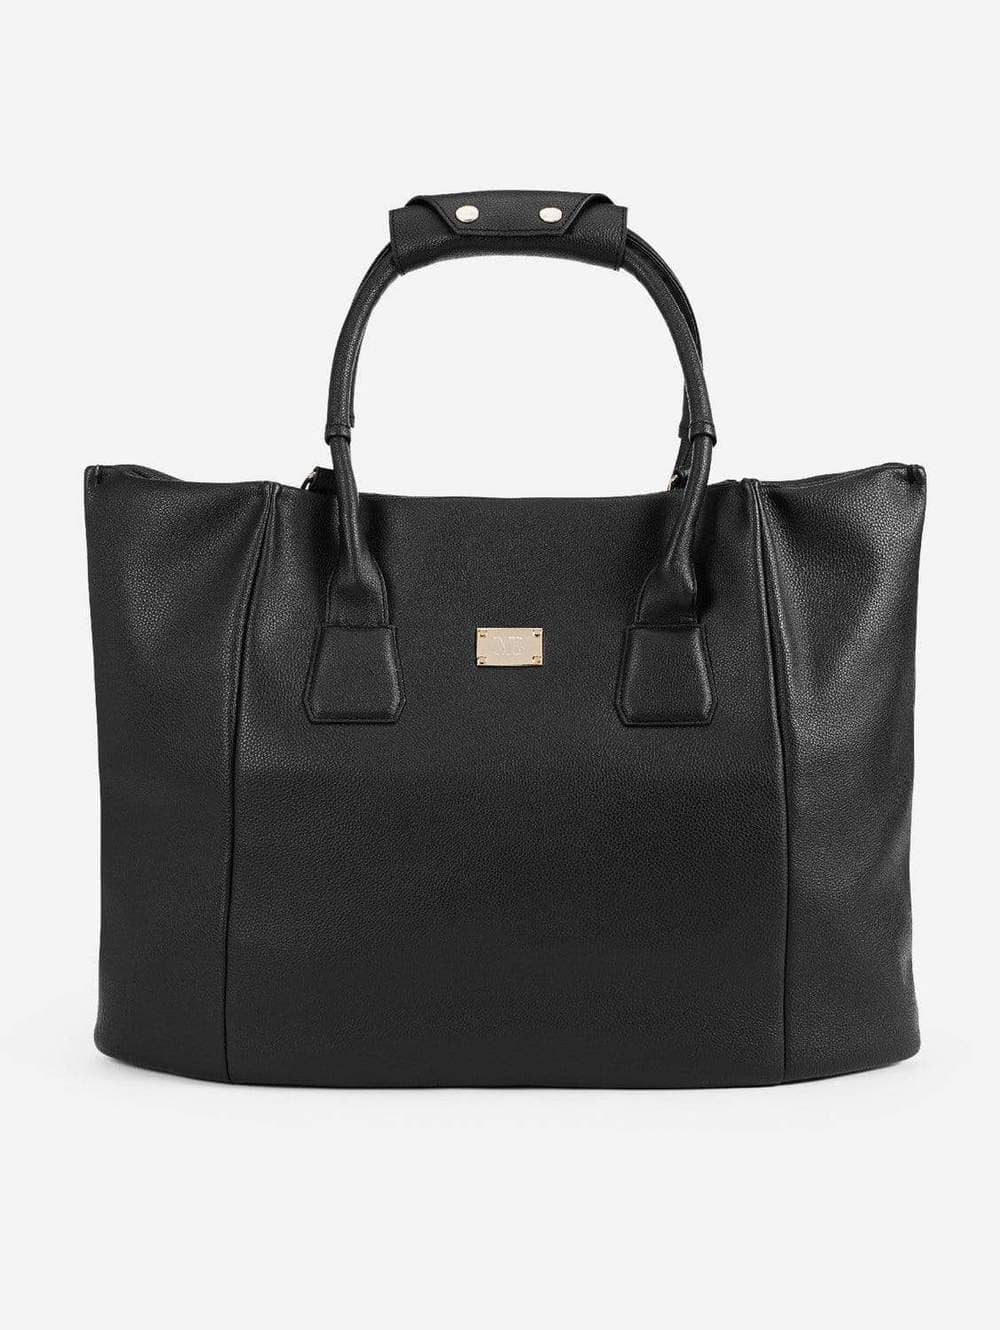 Black vegan leather shopping bag from Melina Bucher